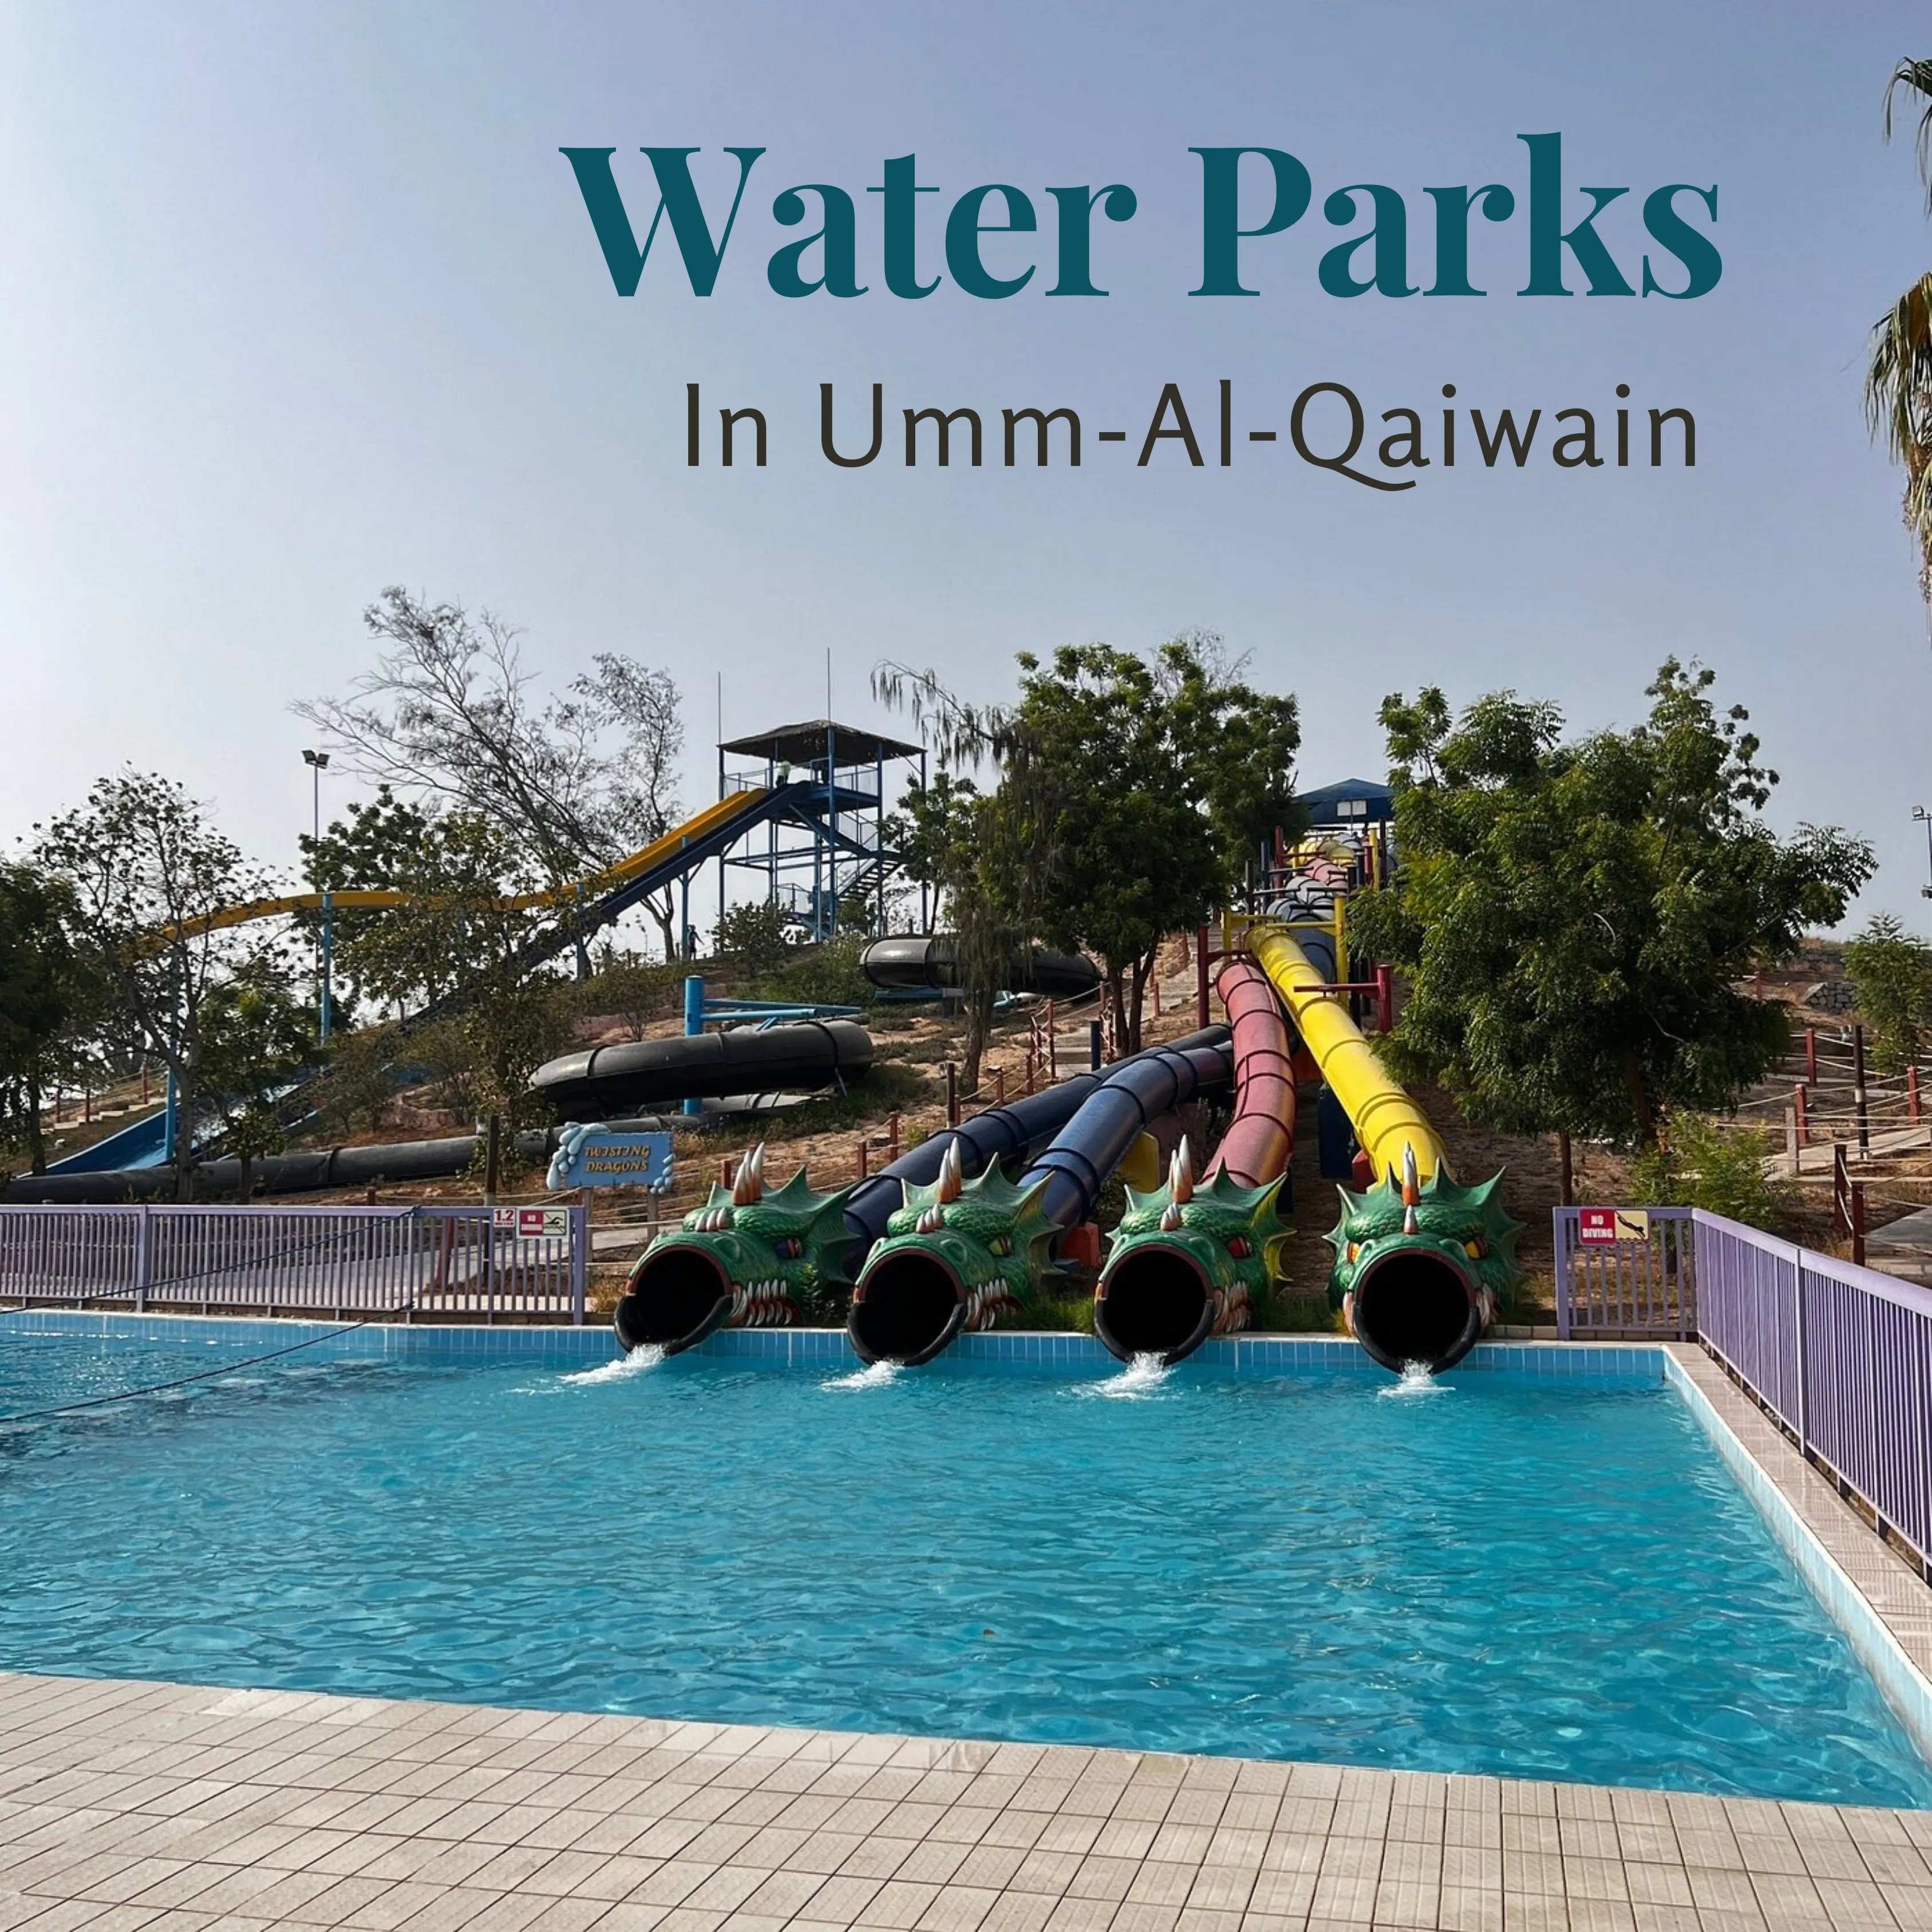 WATER PARKS IN UMM AL QAIWAIN